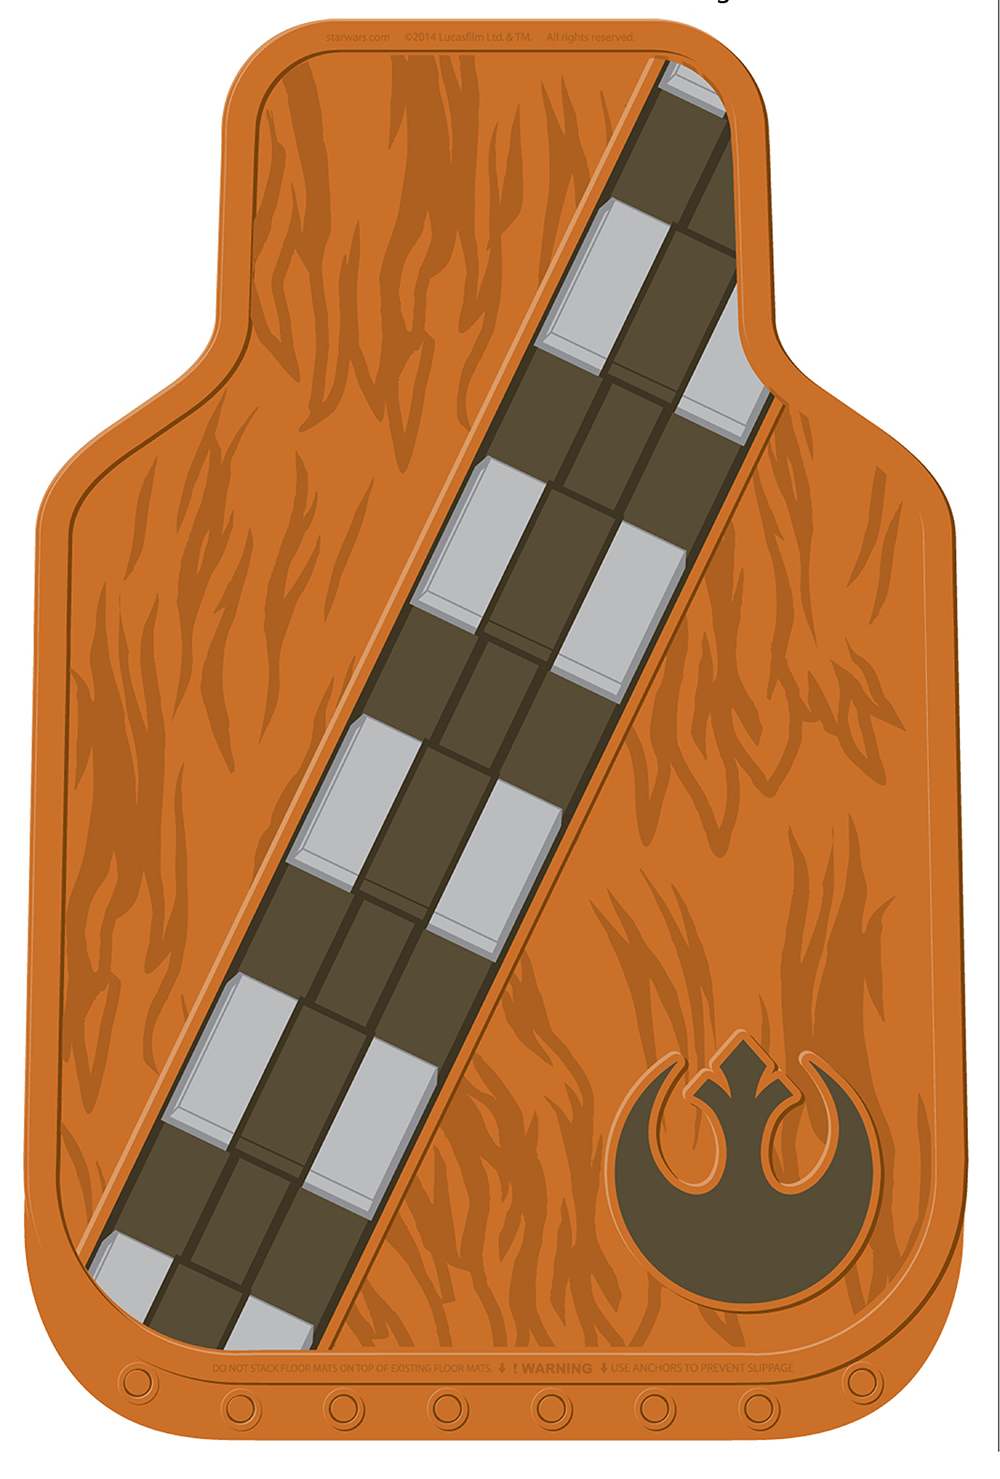 Star Wars Chewbacca Floor Mats